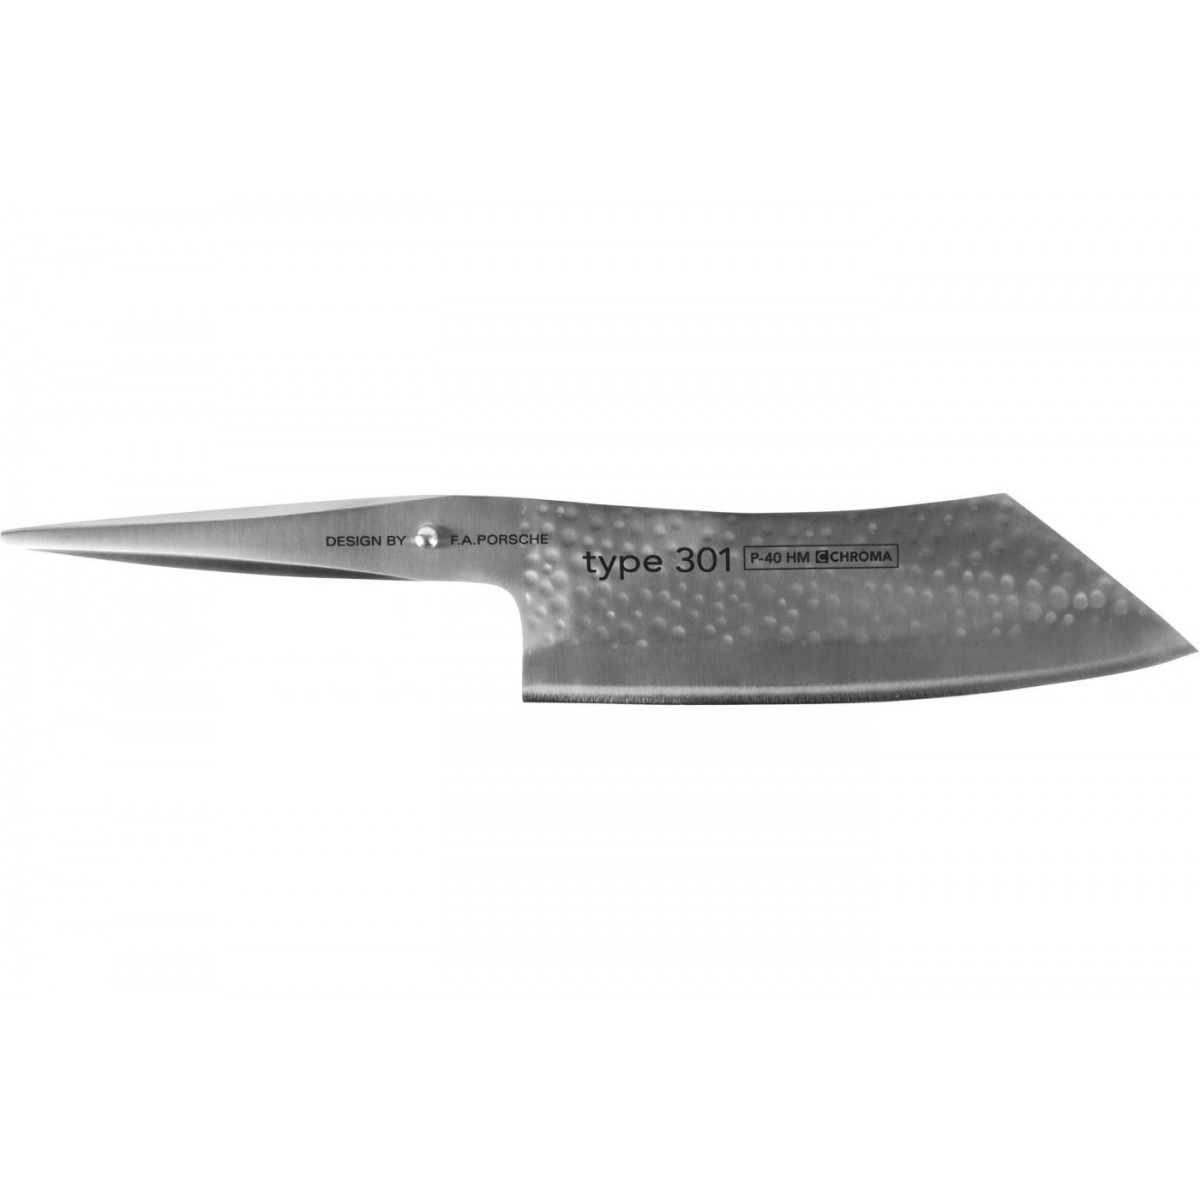 Couteau Santoku Hakata martelé 19cm - Chroma Type 301 HM P40HM